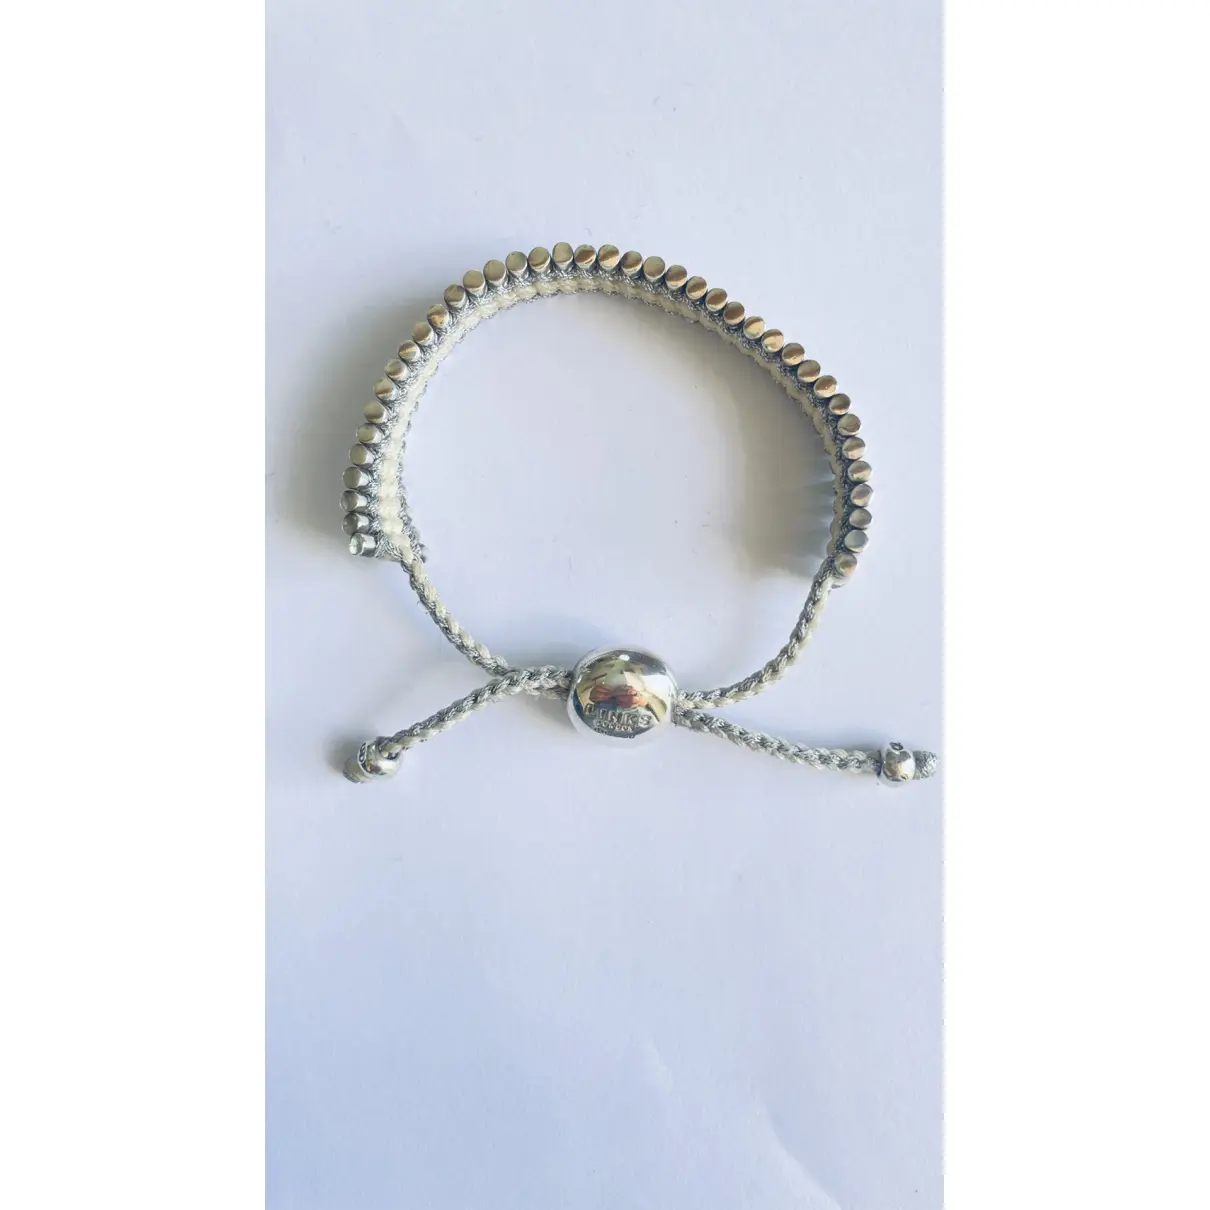 Buy Links Of London Silver bracelet online